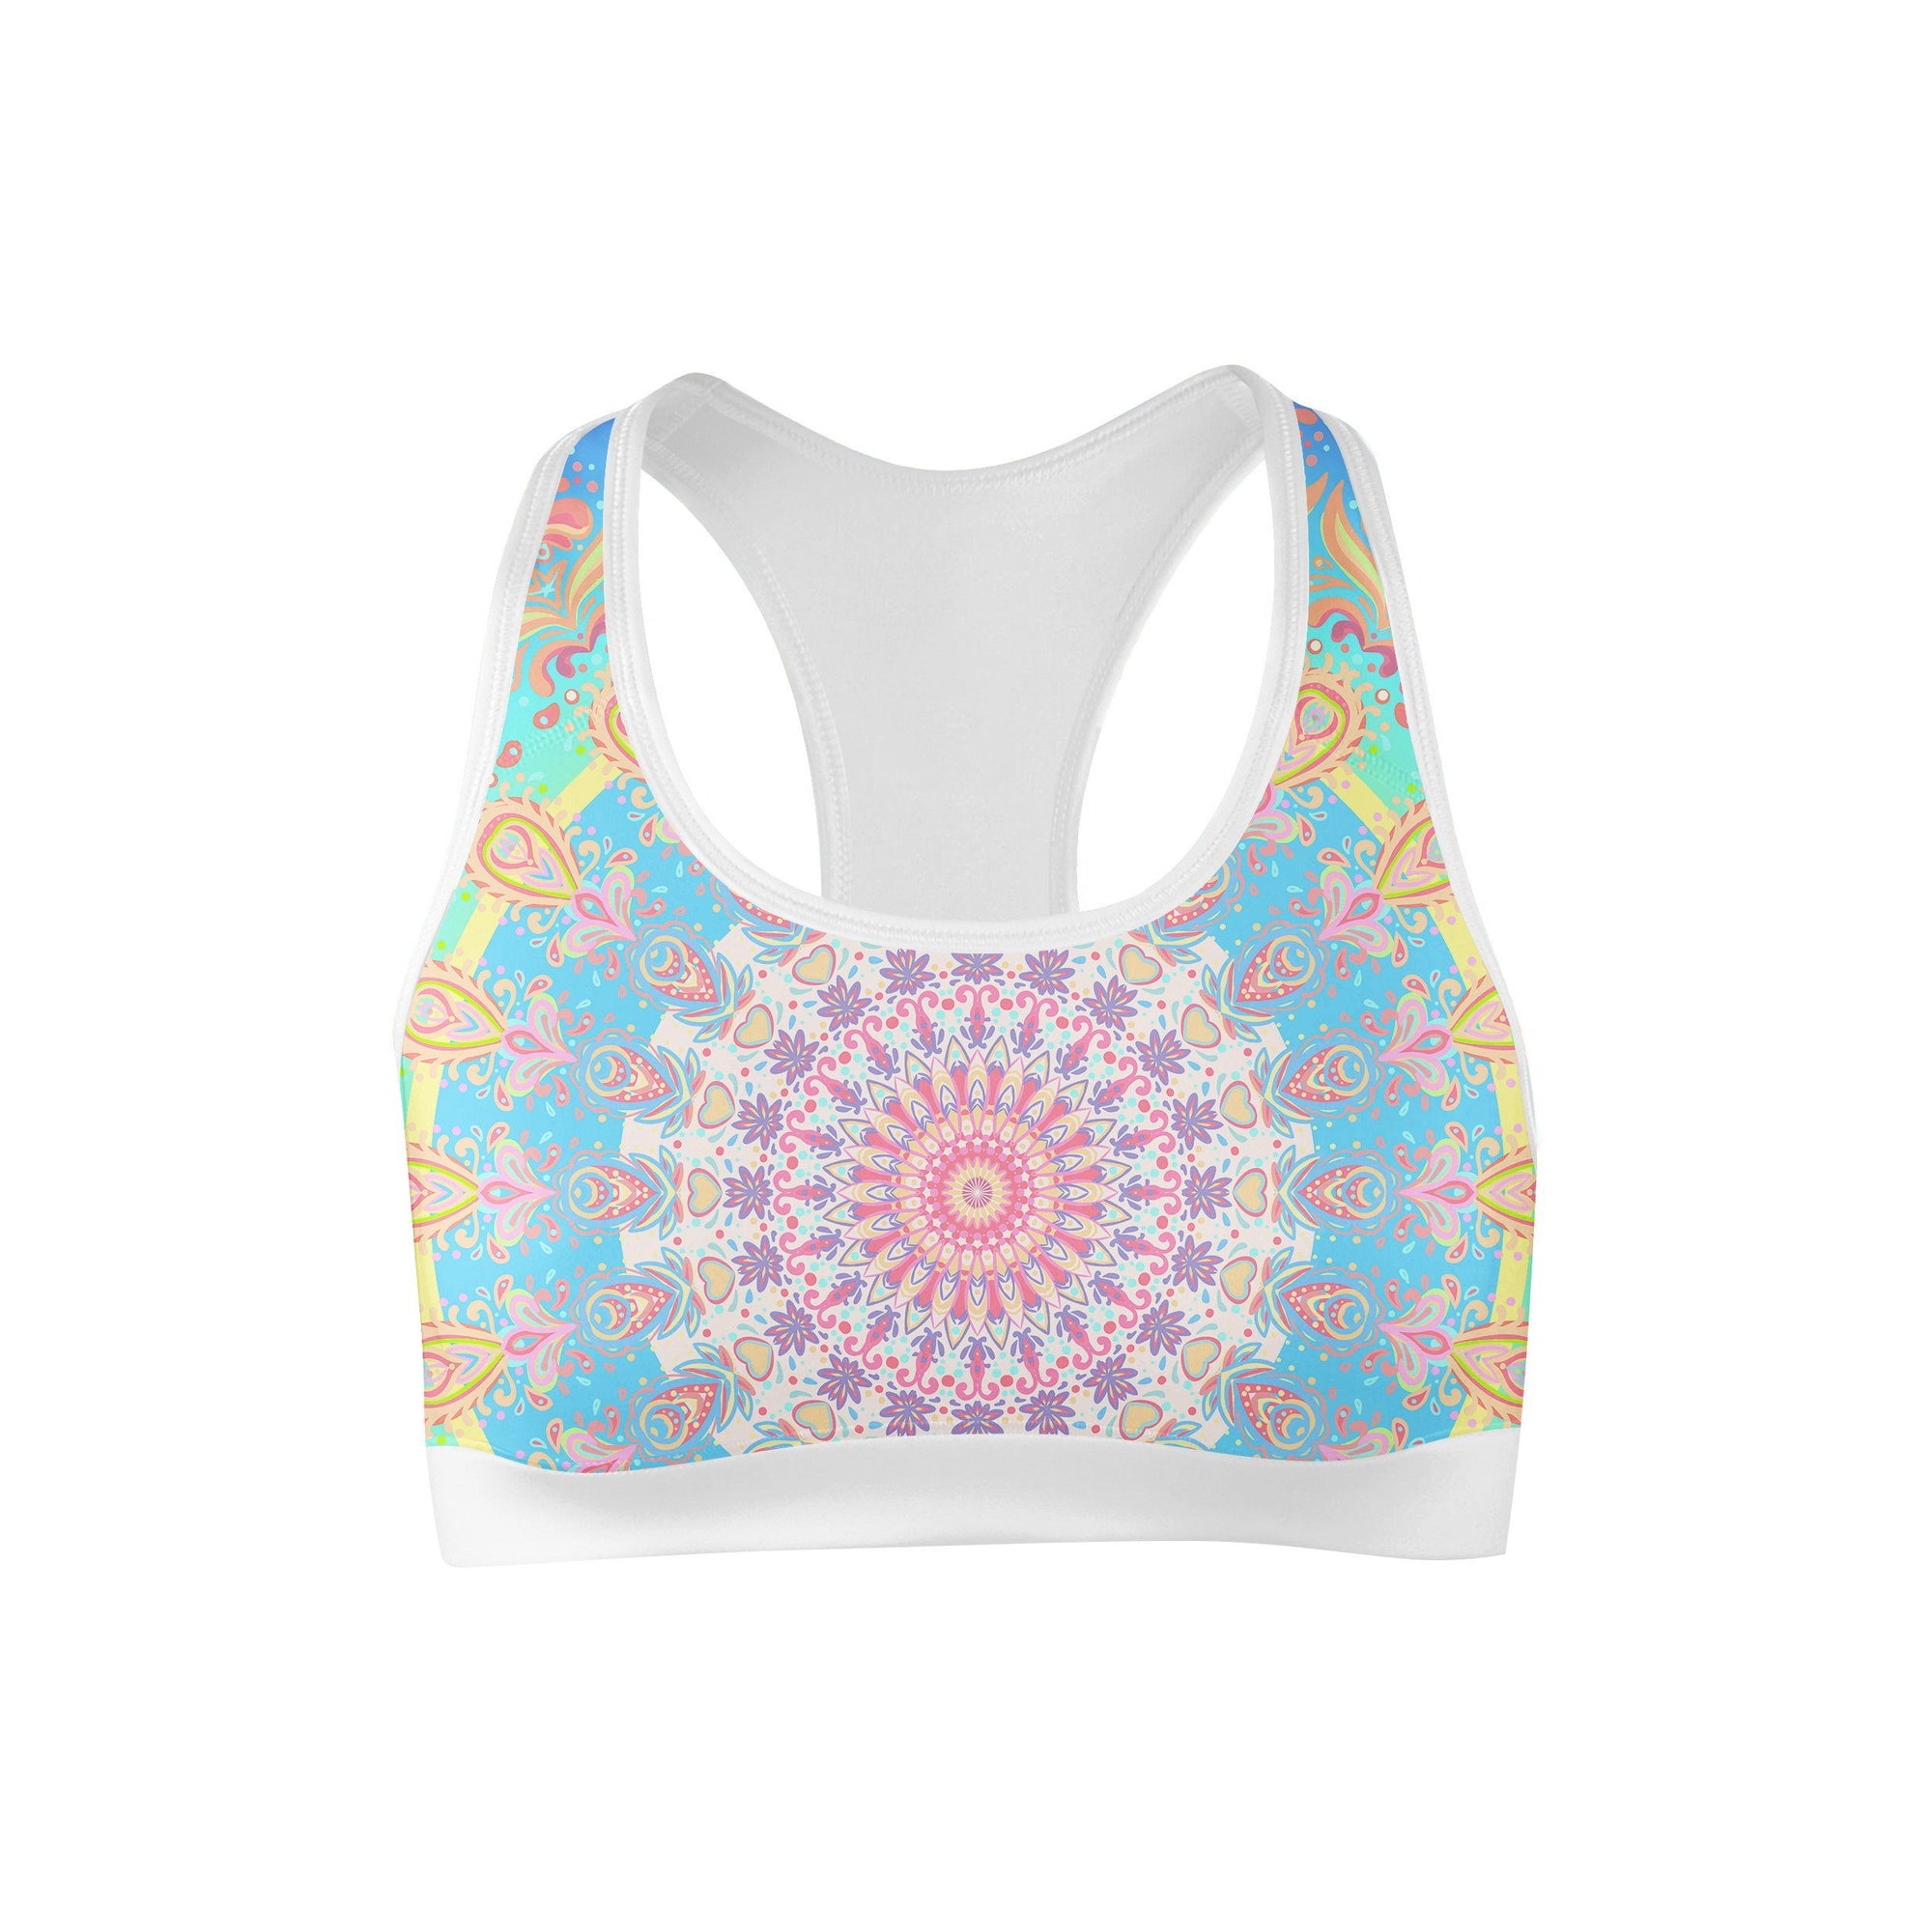 Colorful Mandala Sports bra